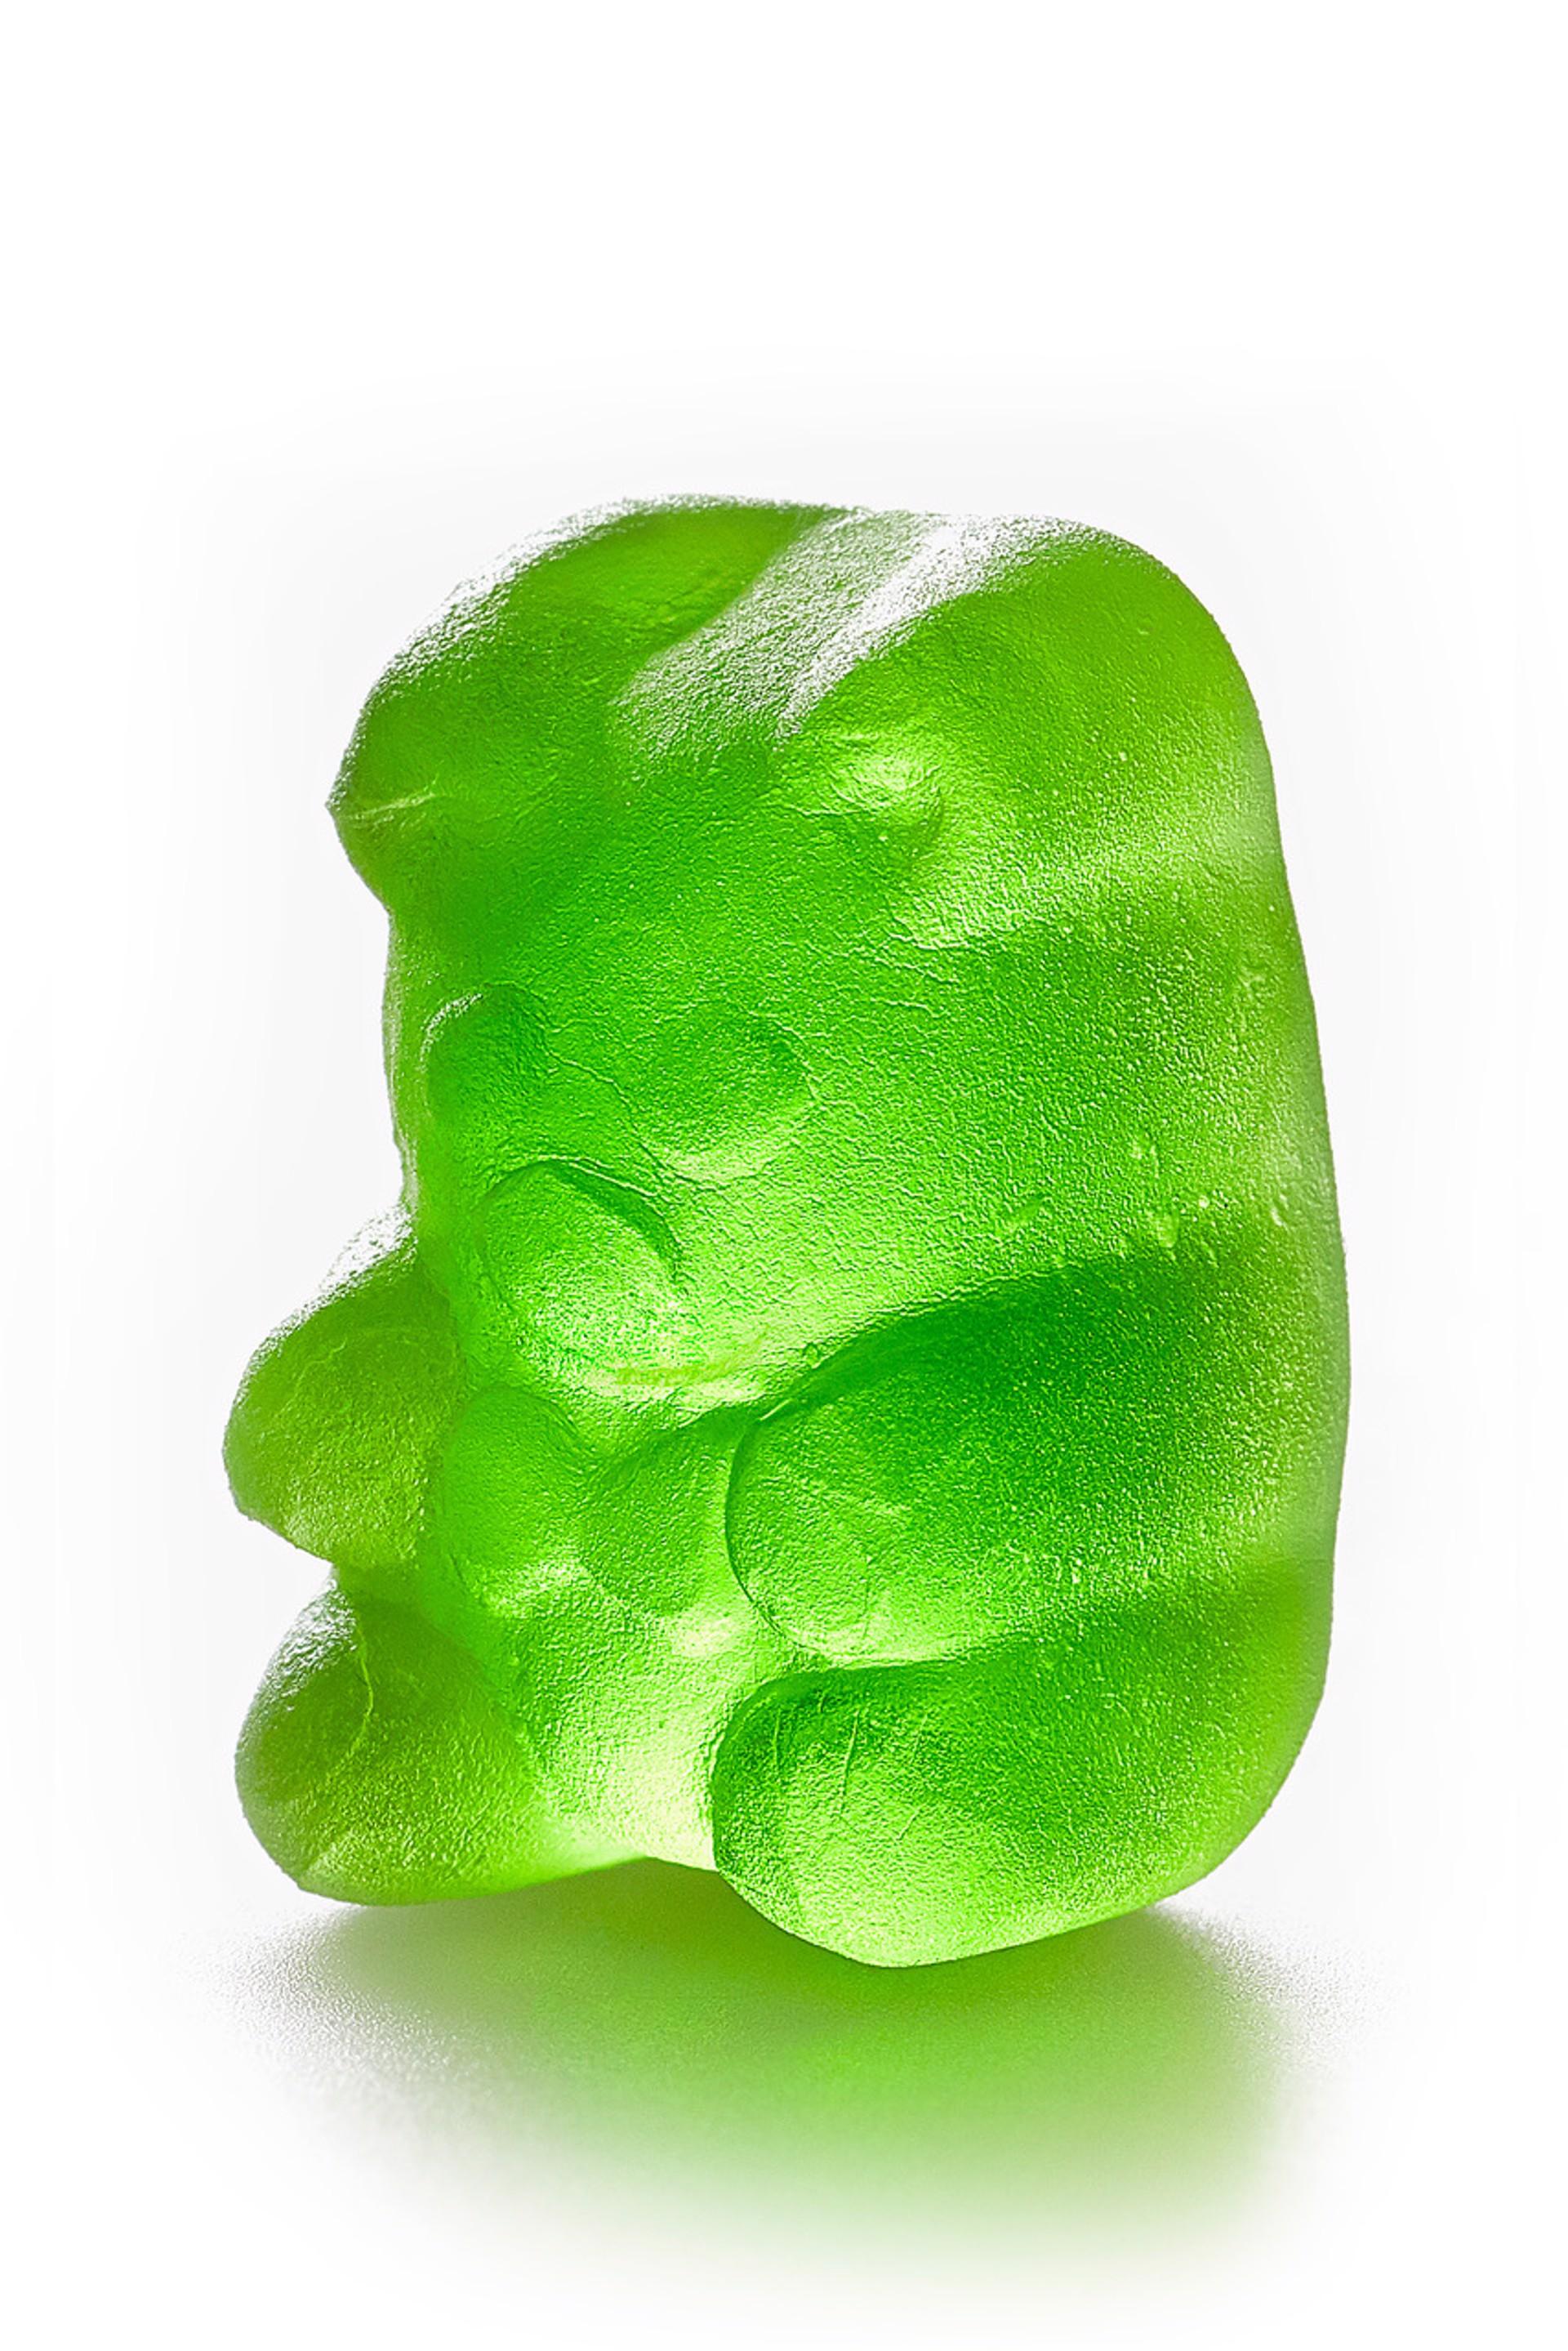 Peter Andrew Lusztyk Color Photograph - Gummy Bear Green (36" x 24")